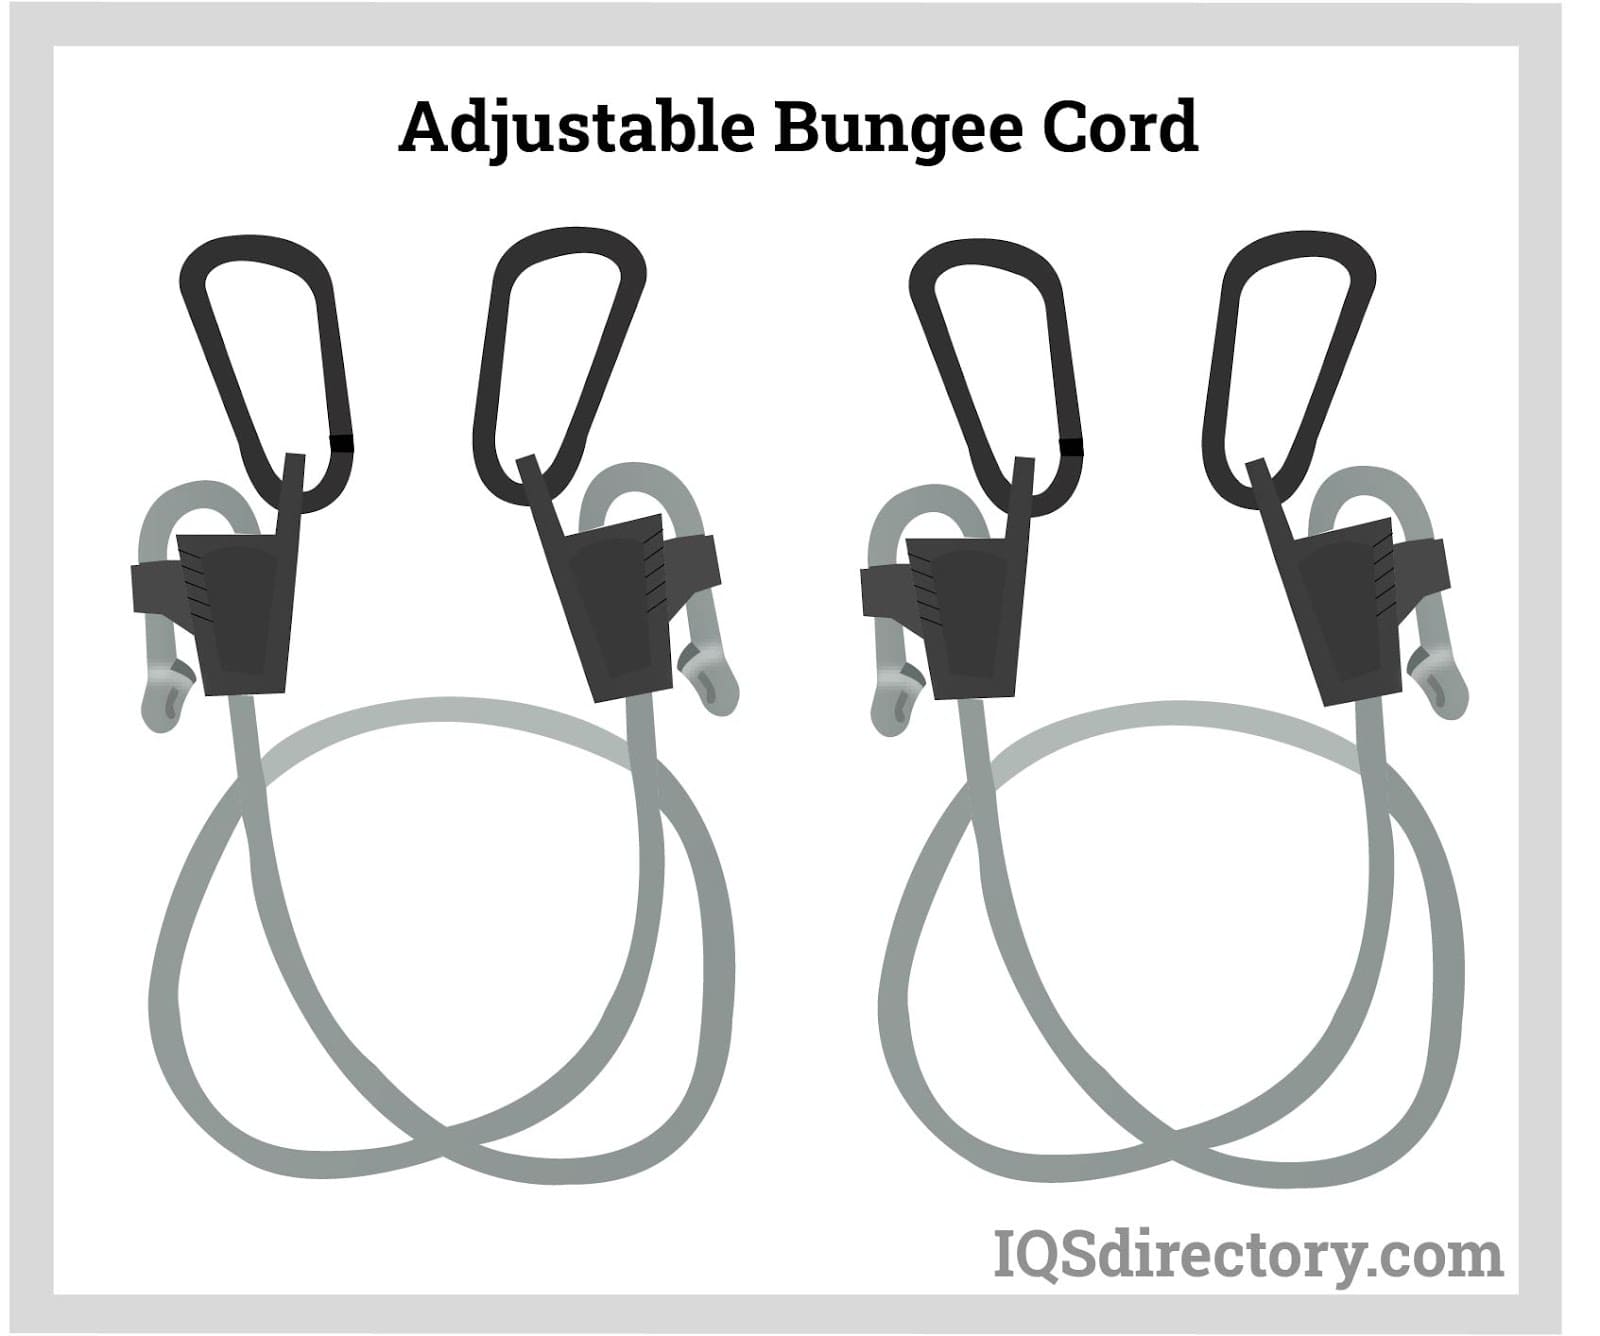 Adjustable Bungee Cord